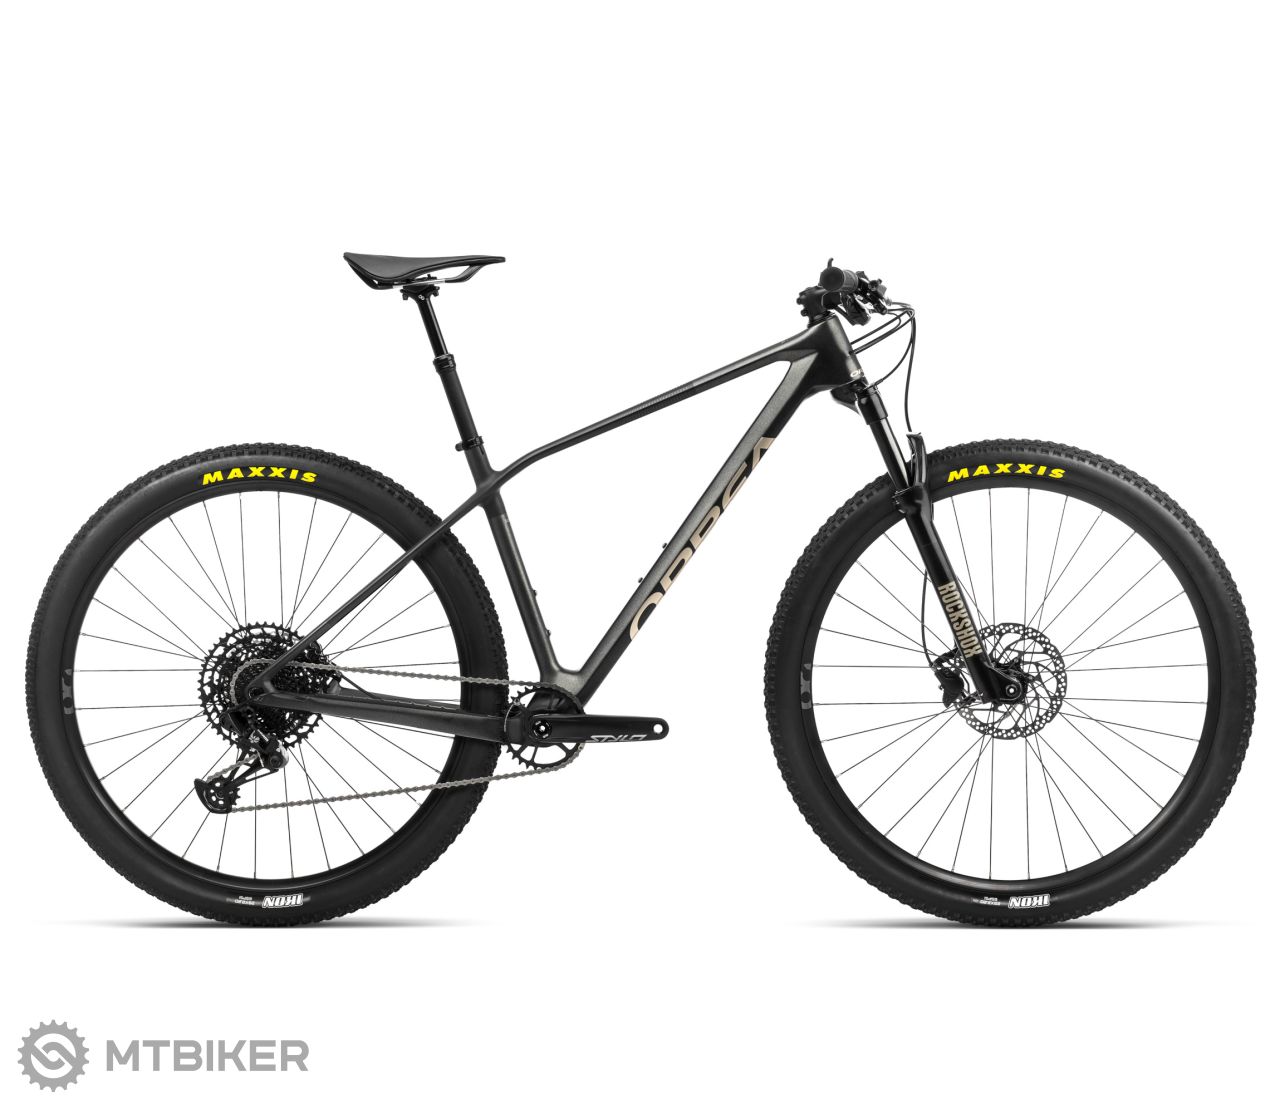 Orbea ALMA M51 29 bicykel, powder black/black